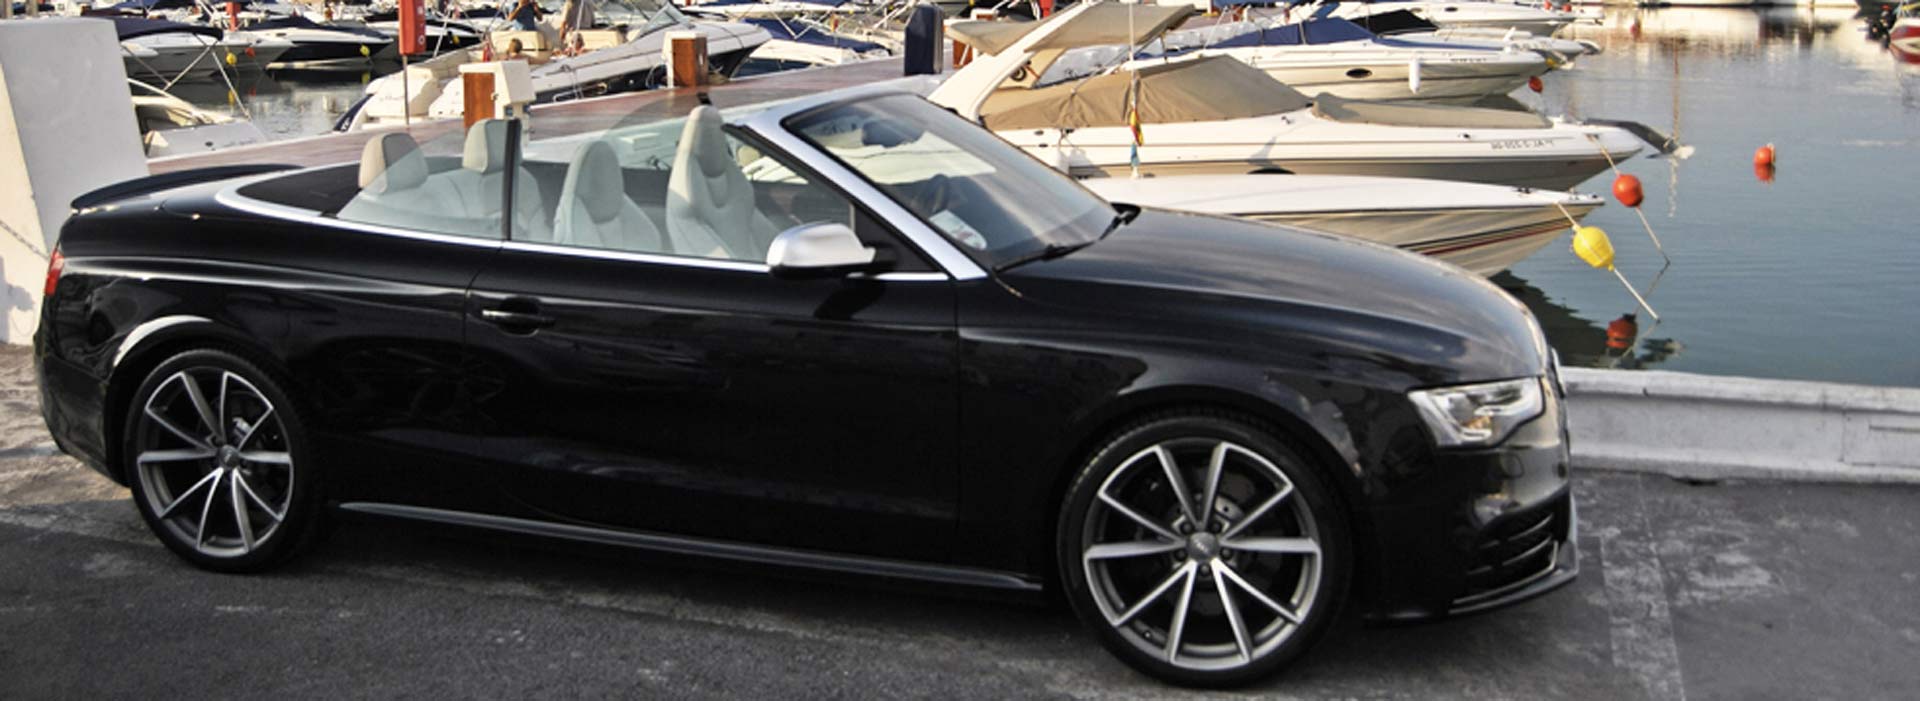 Audi RS5 Convertible Rental New Zealand - hire luxury sports car NZ